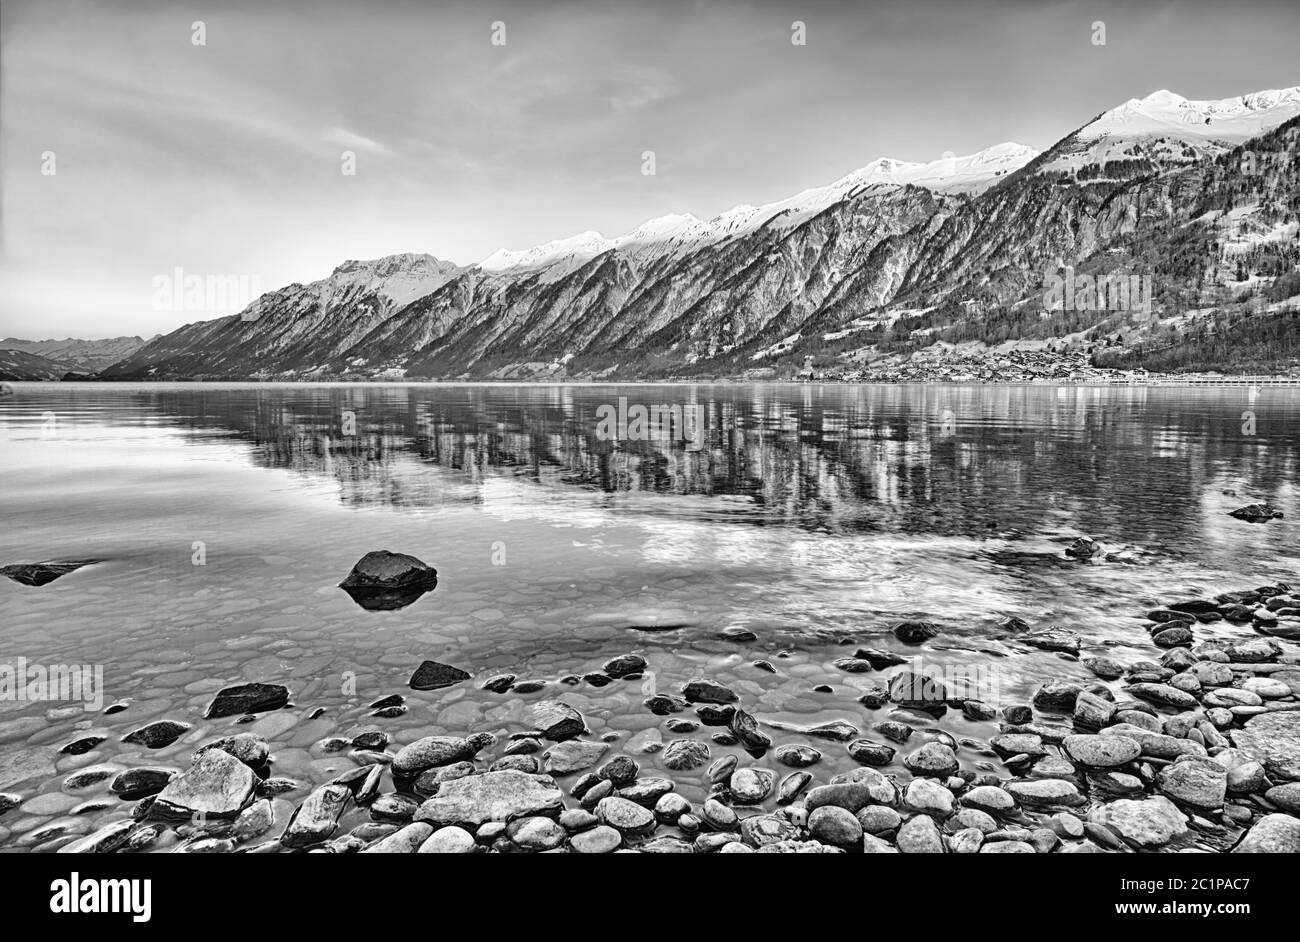 Lake of Brienz in BW Stock Photo